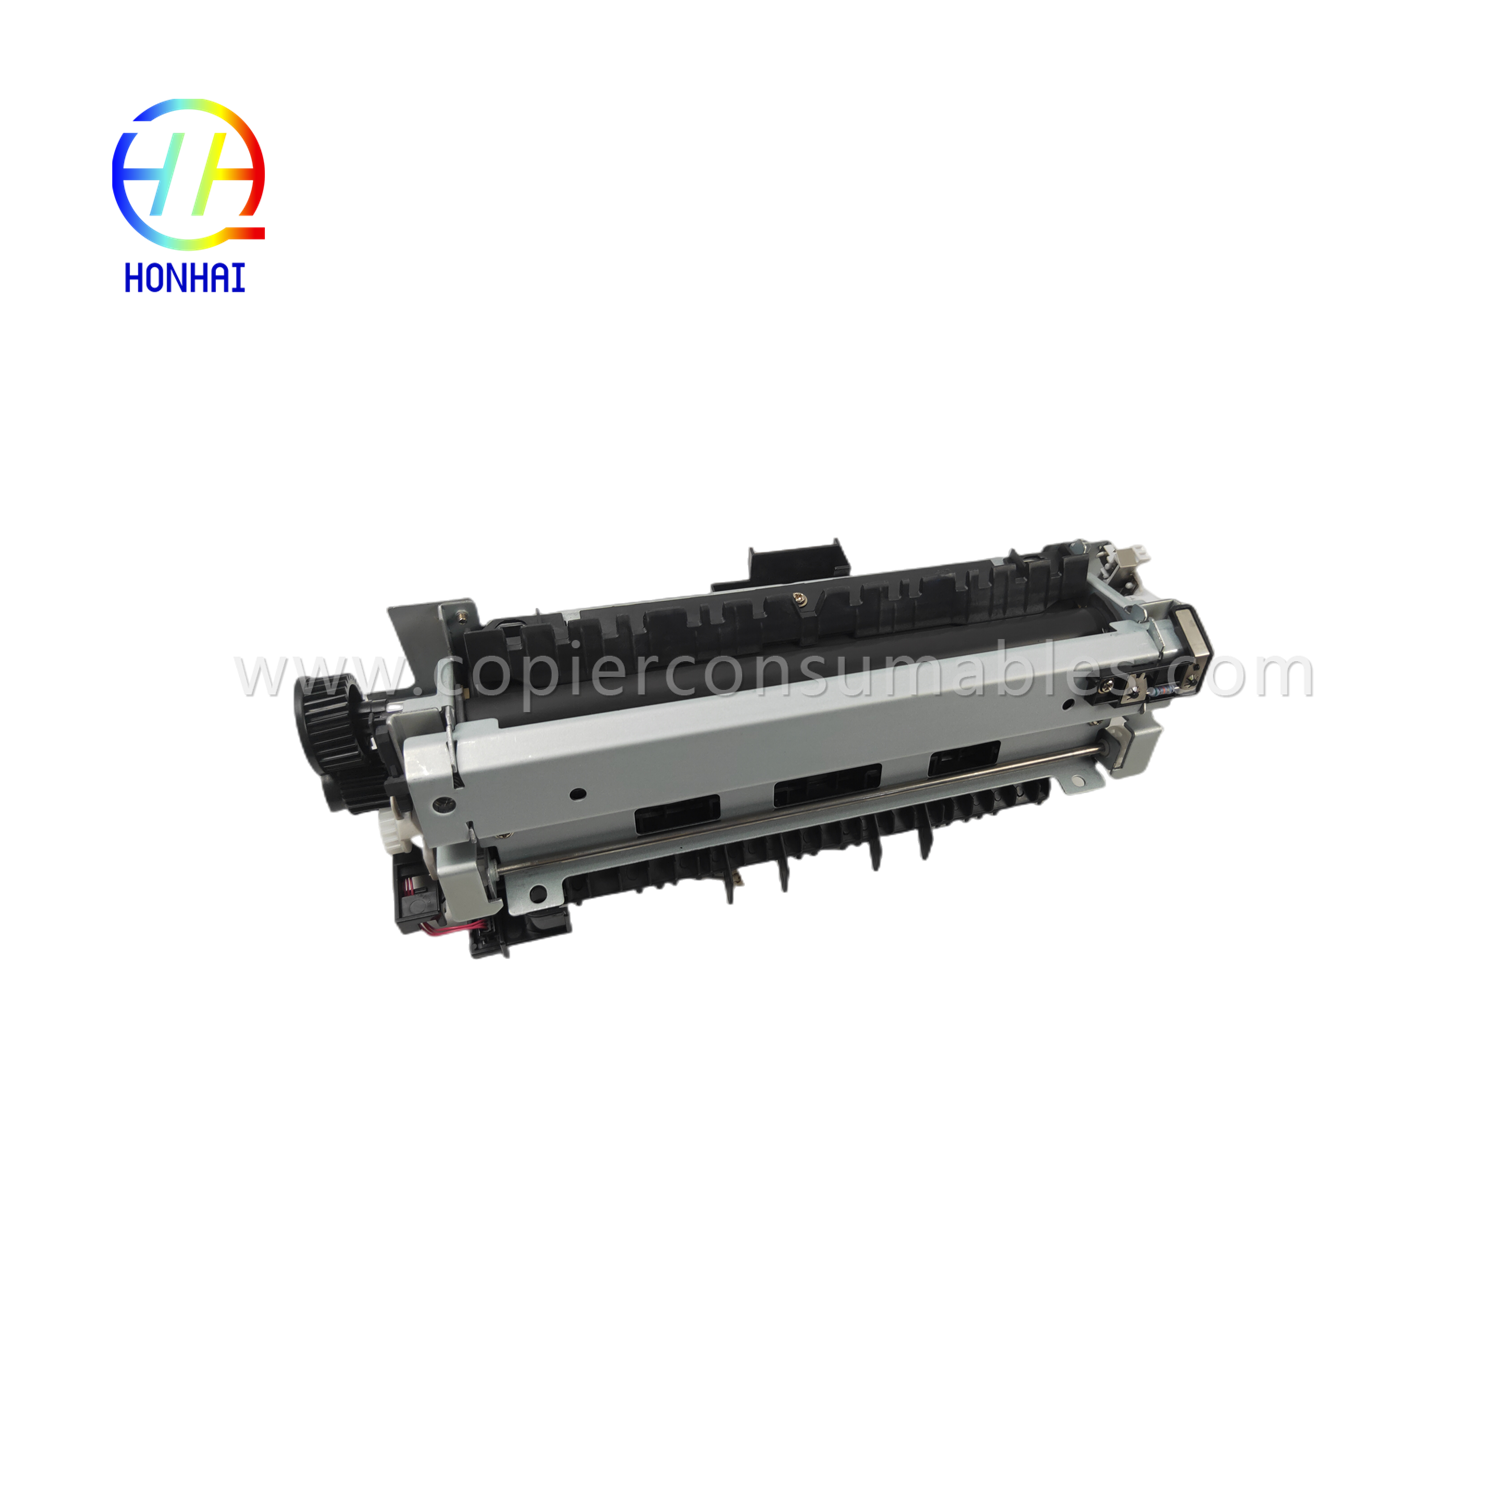 https://c585.goodao.net/fuser-assemblies-220v-japan-for-hp-521-525-m521-m525-rm1-8508-rm1-8508-000-fuser-unit-product/